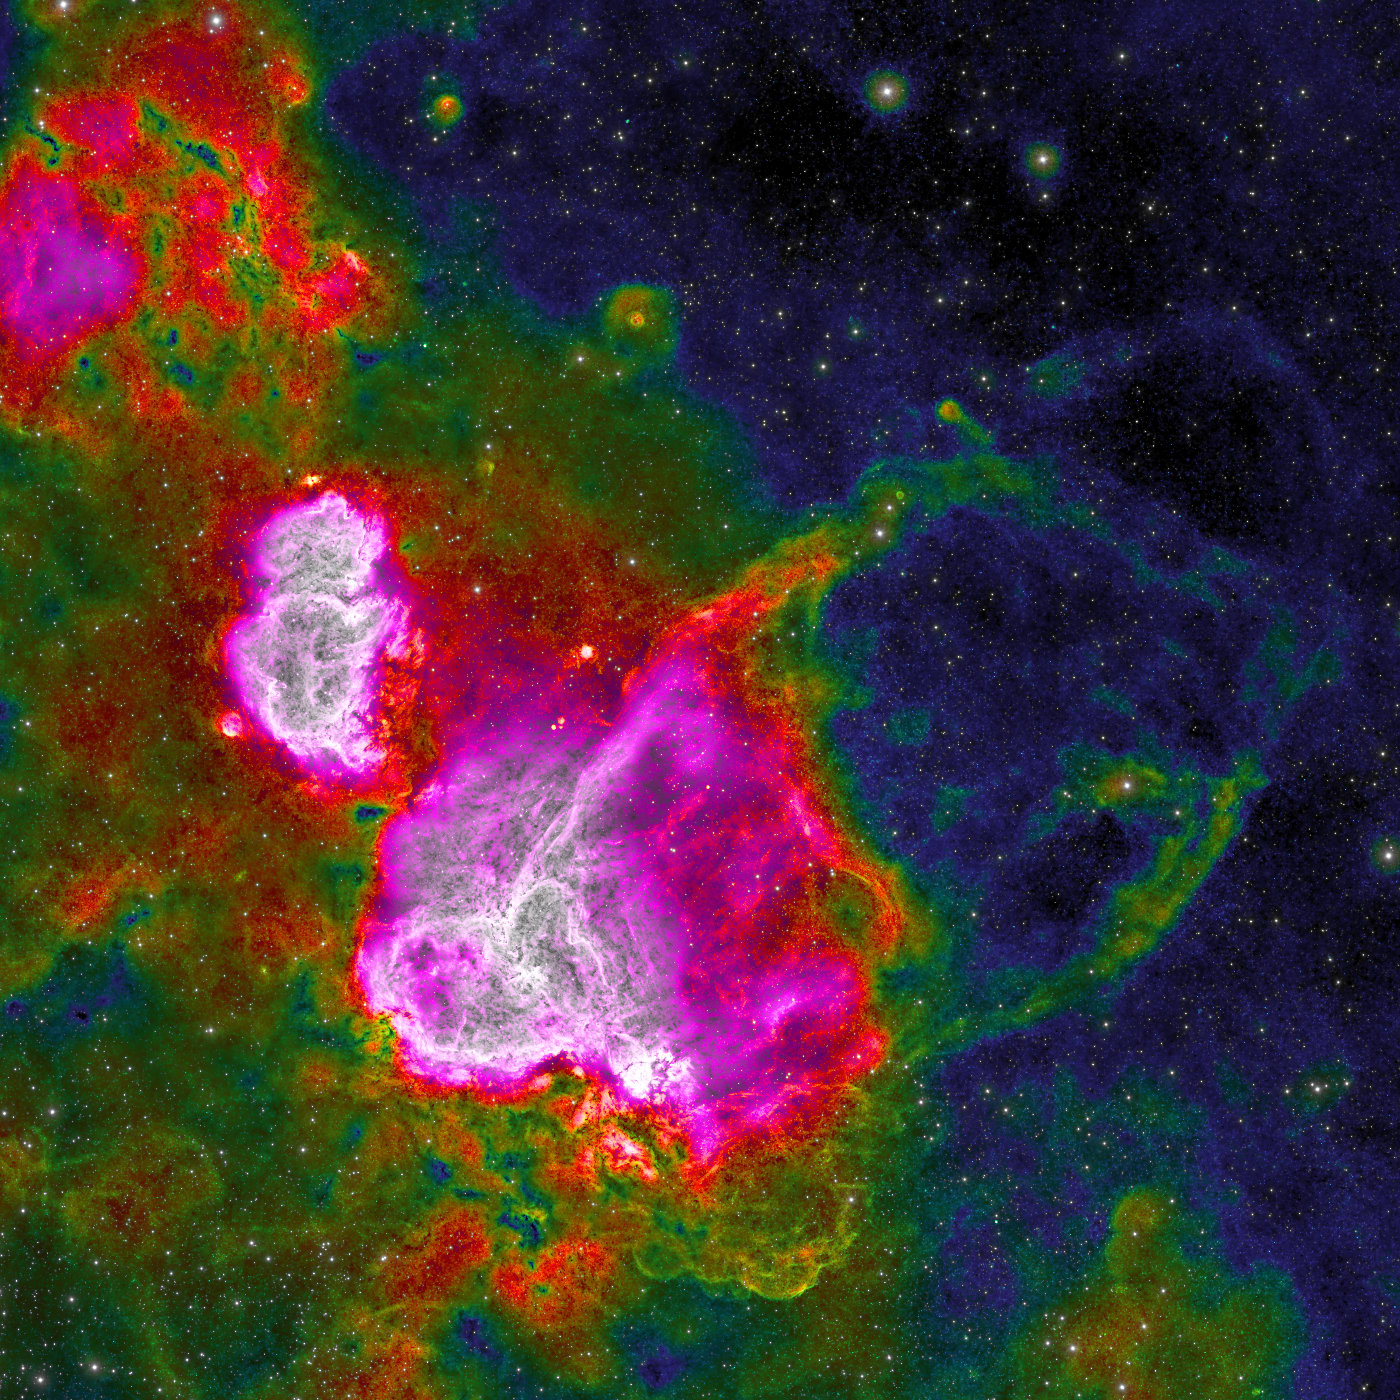 SH2-199 (Soul Nebula) and SH2-190 (Heart Nebula) and W4 superbubble/chimney in H-alpha